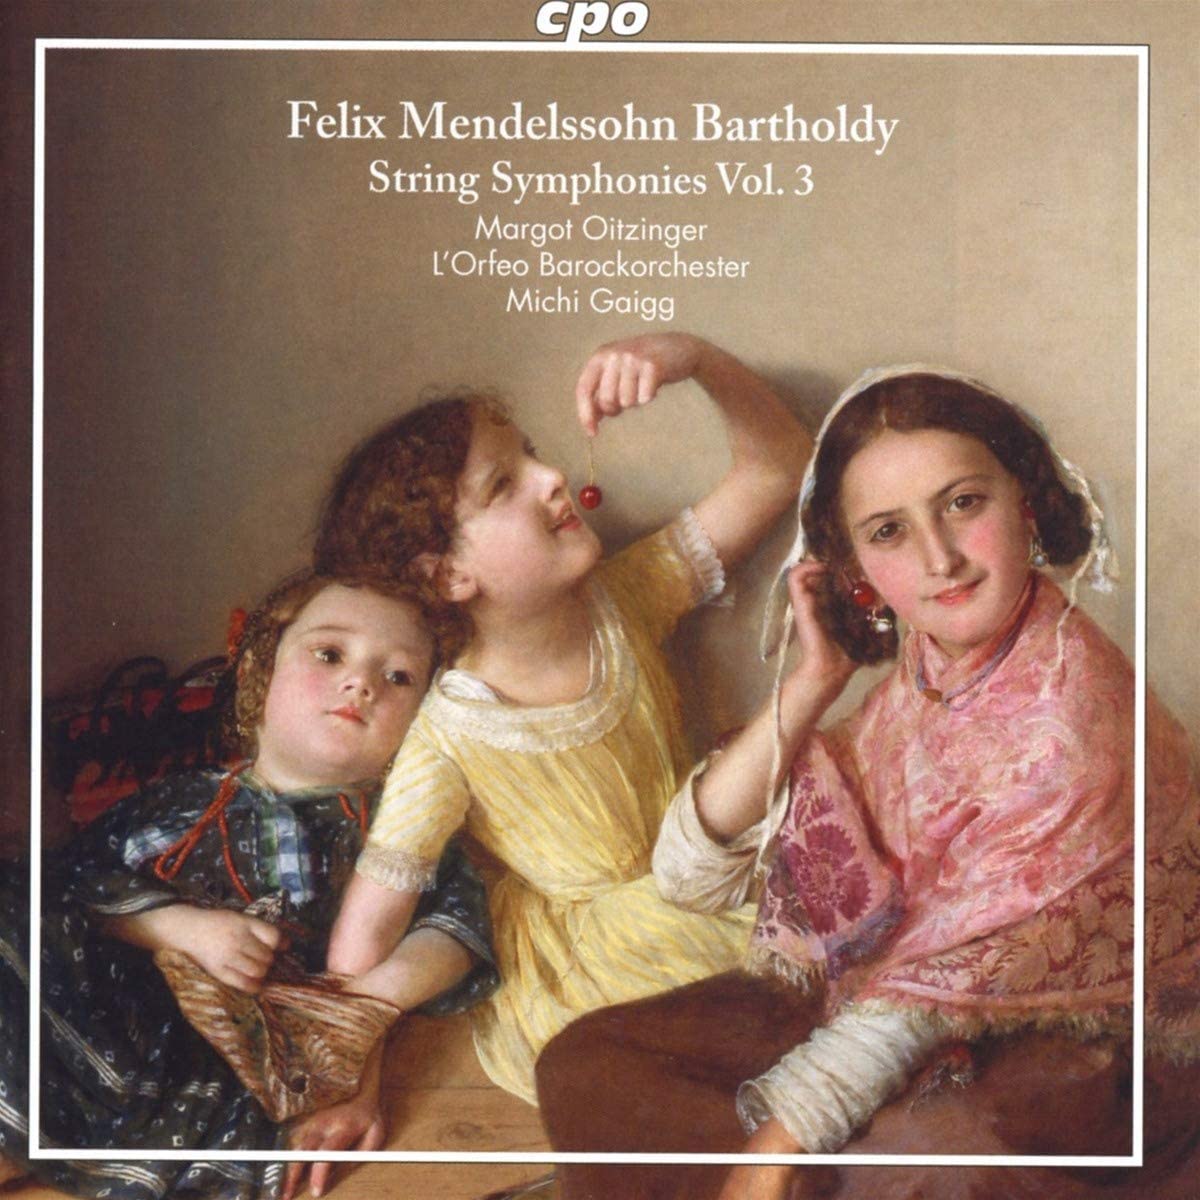 Cover of cpo CD Mendelssohn string symphonies vol. 3